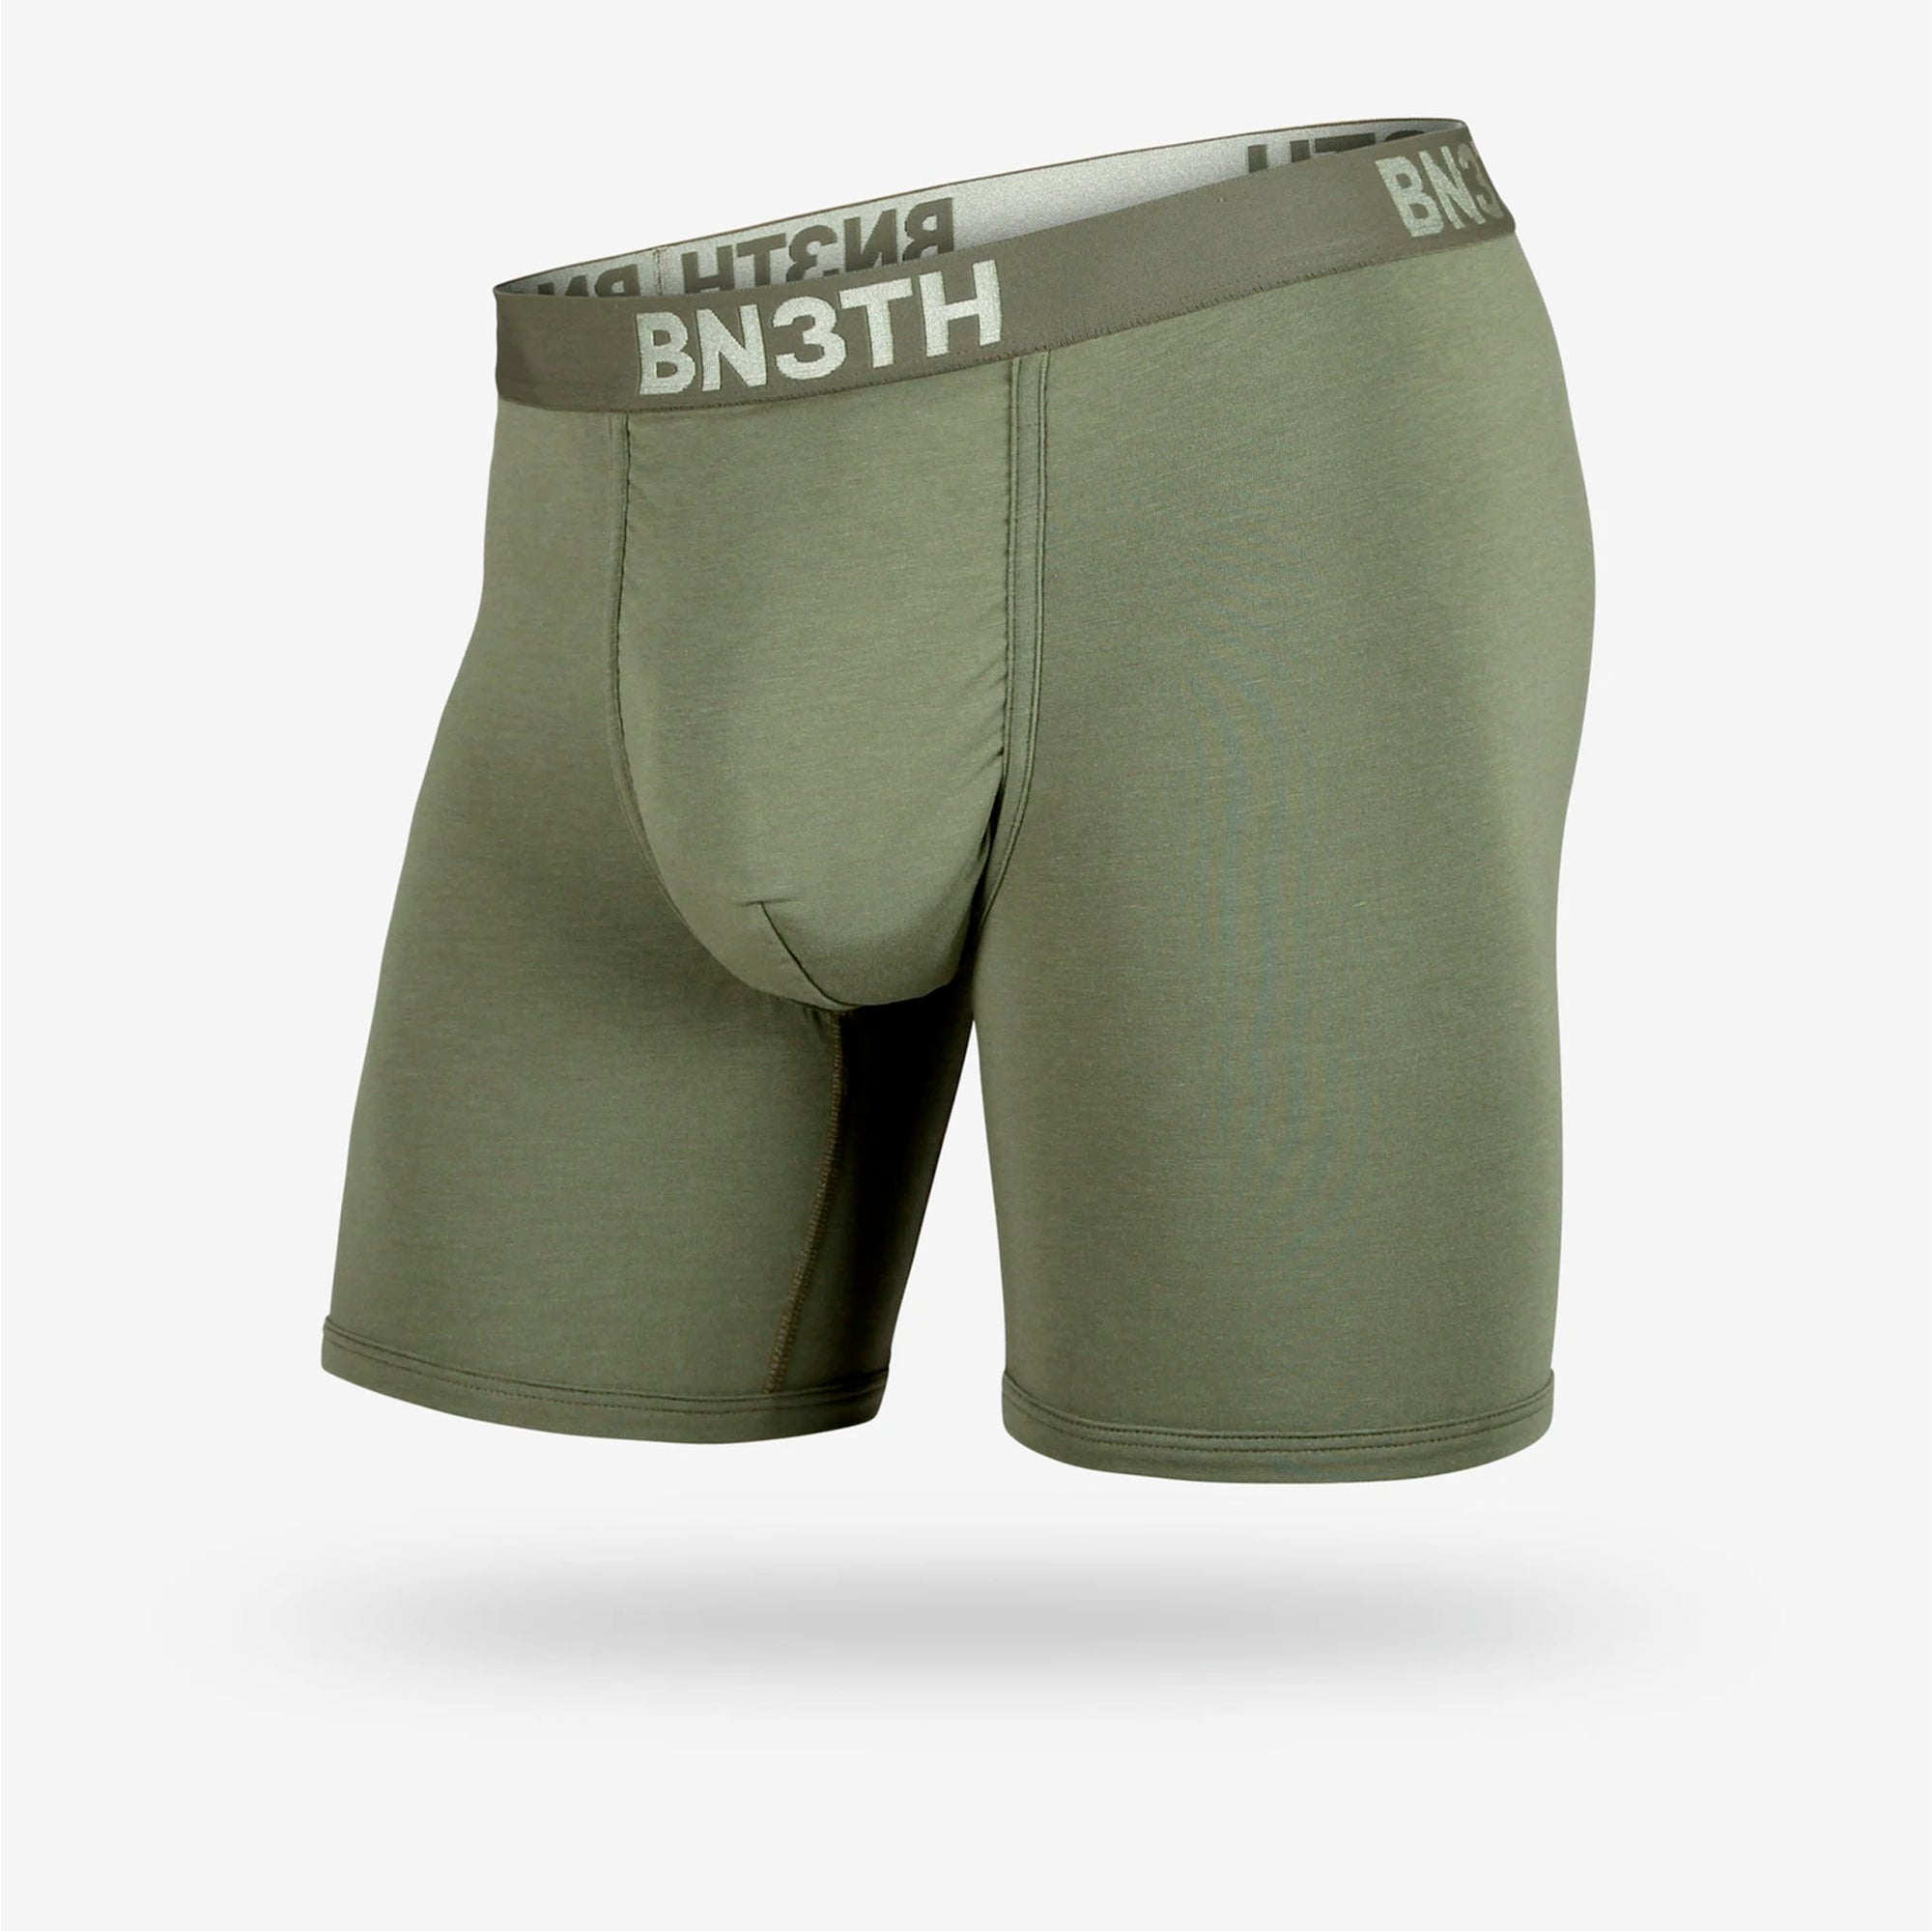 BN3TH Classic Men's Boxer Briefs - Pine/Haze